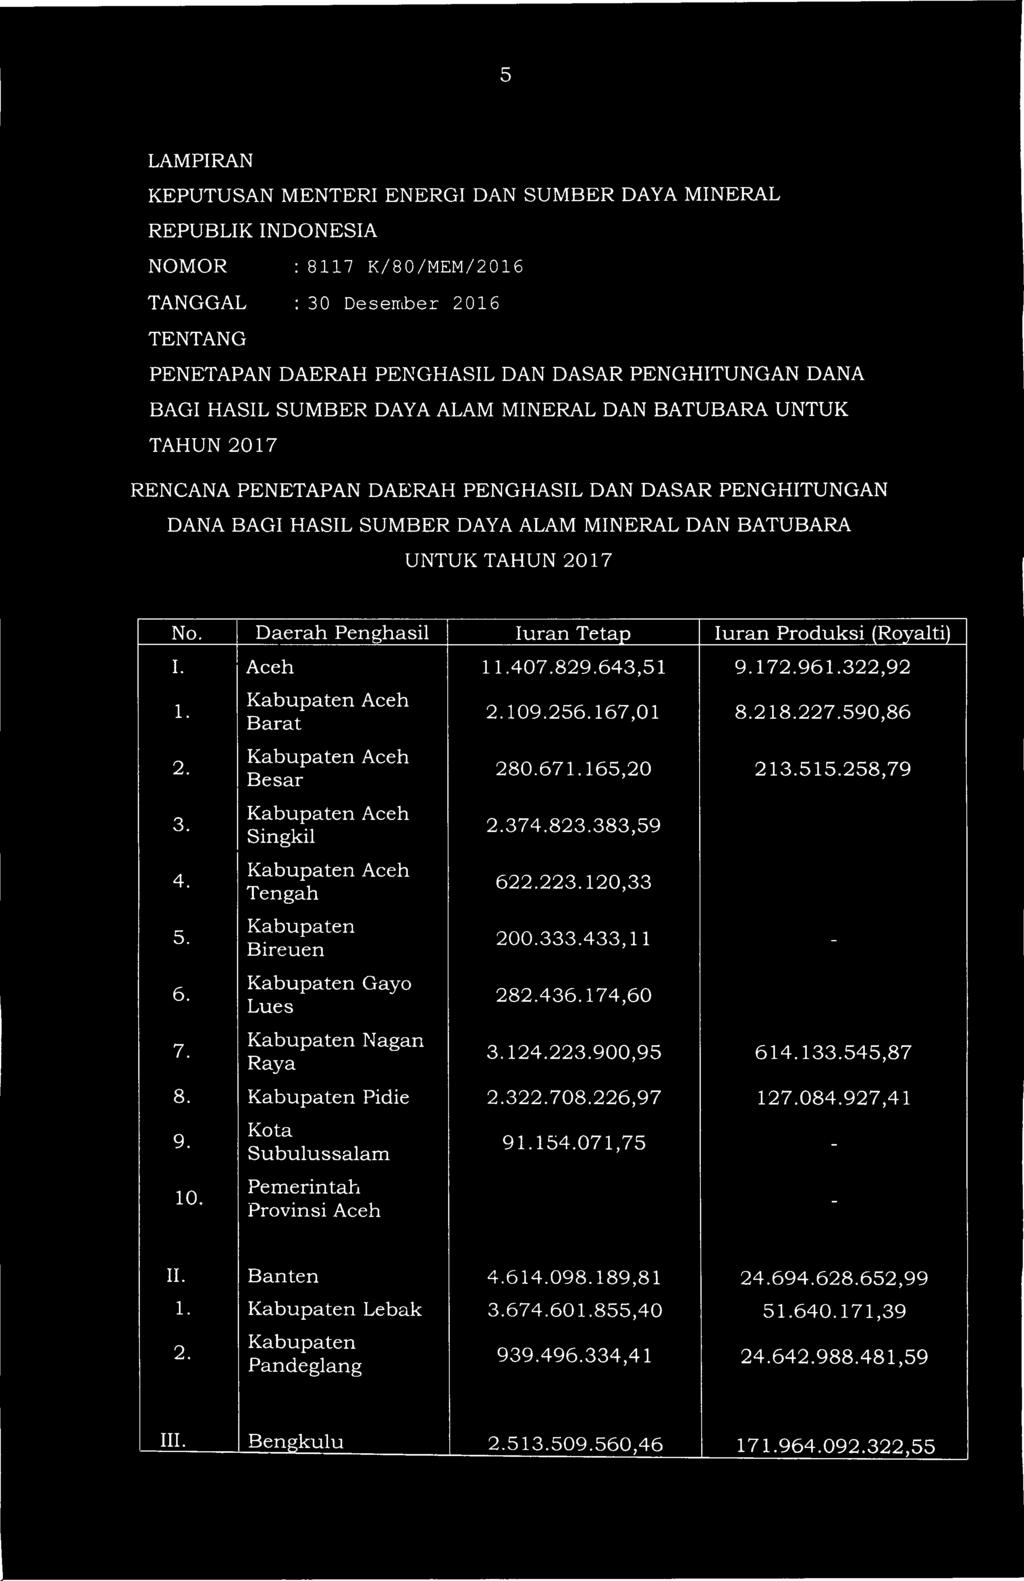 Daerah Penghasil luran Tetap luran Produksi (Royaiti) Aceh 14082643,51 1796322,92 Aceh Barat Aceh Besar Aceh Singkil Aceh Tengah Bireuen Gayo Lues Nagan Raya 1025167,01 2122590,86 280.